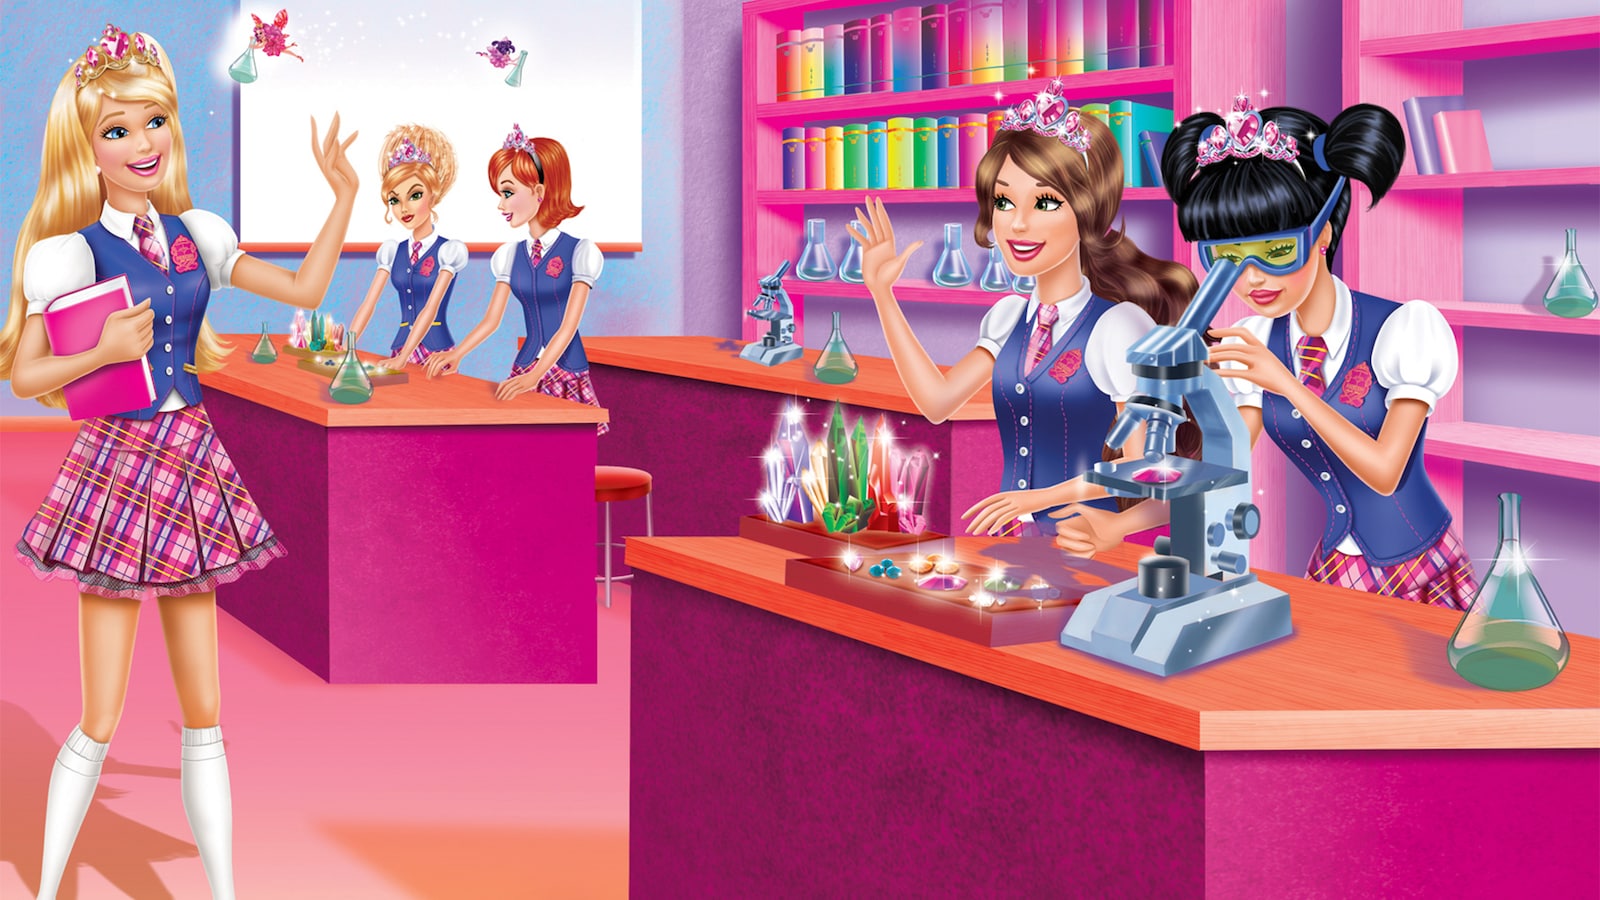 barbie-prinsessakademin-2011